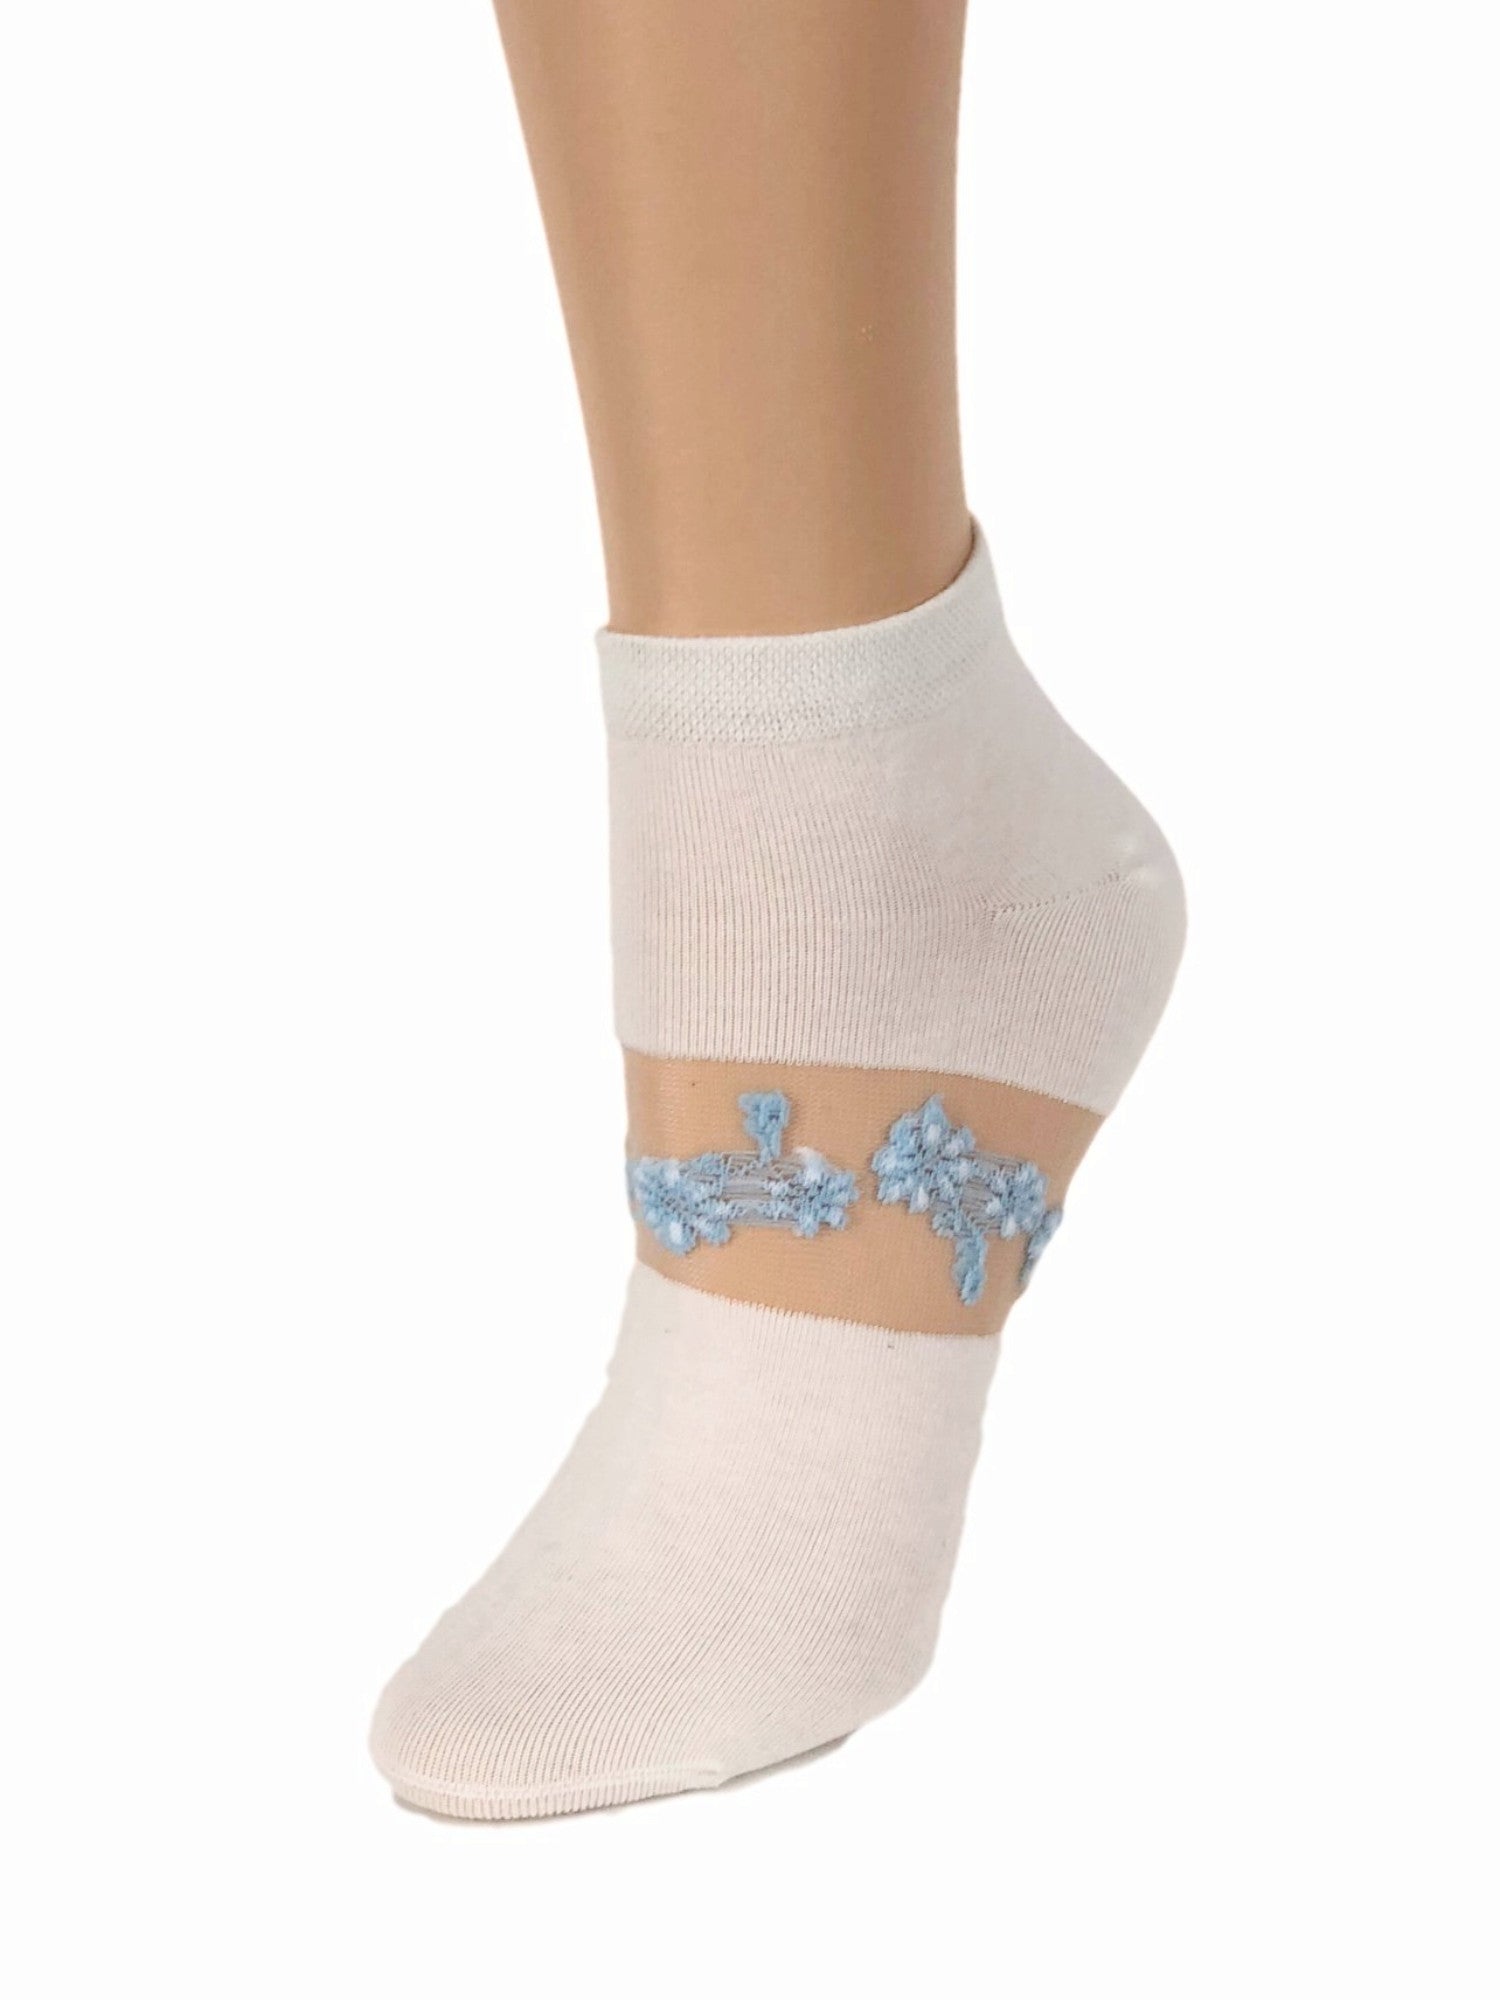 One-Stripped Light Blue Ankle Sheer Socks - Global Trendz Fashion®